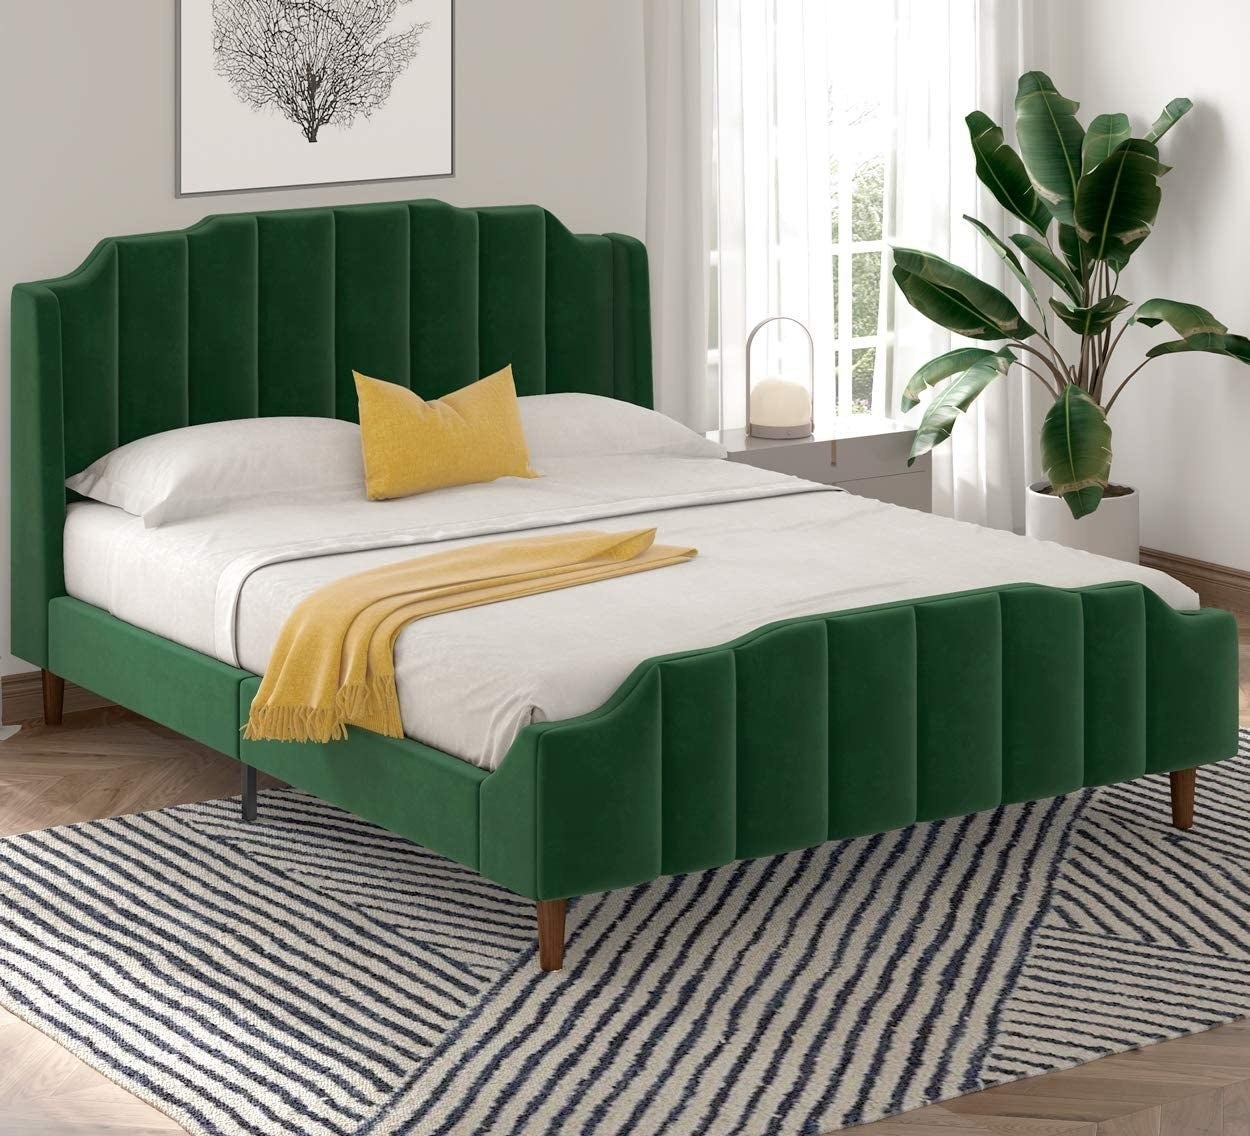 27 Bed Frames That Only Look, Bed Frames Under 300